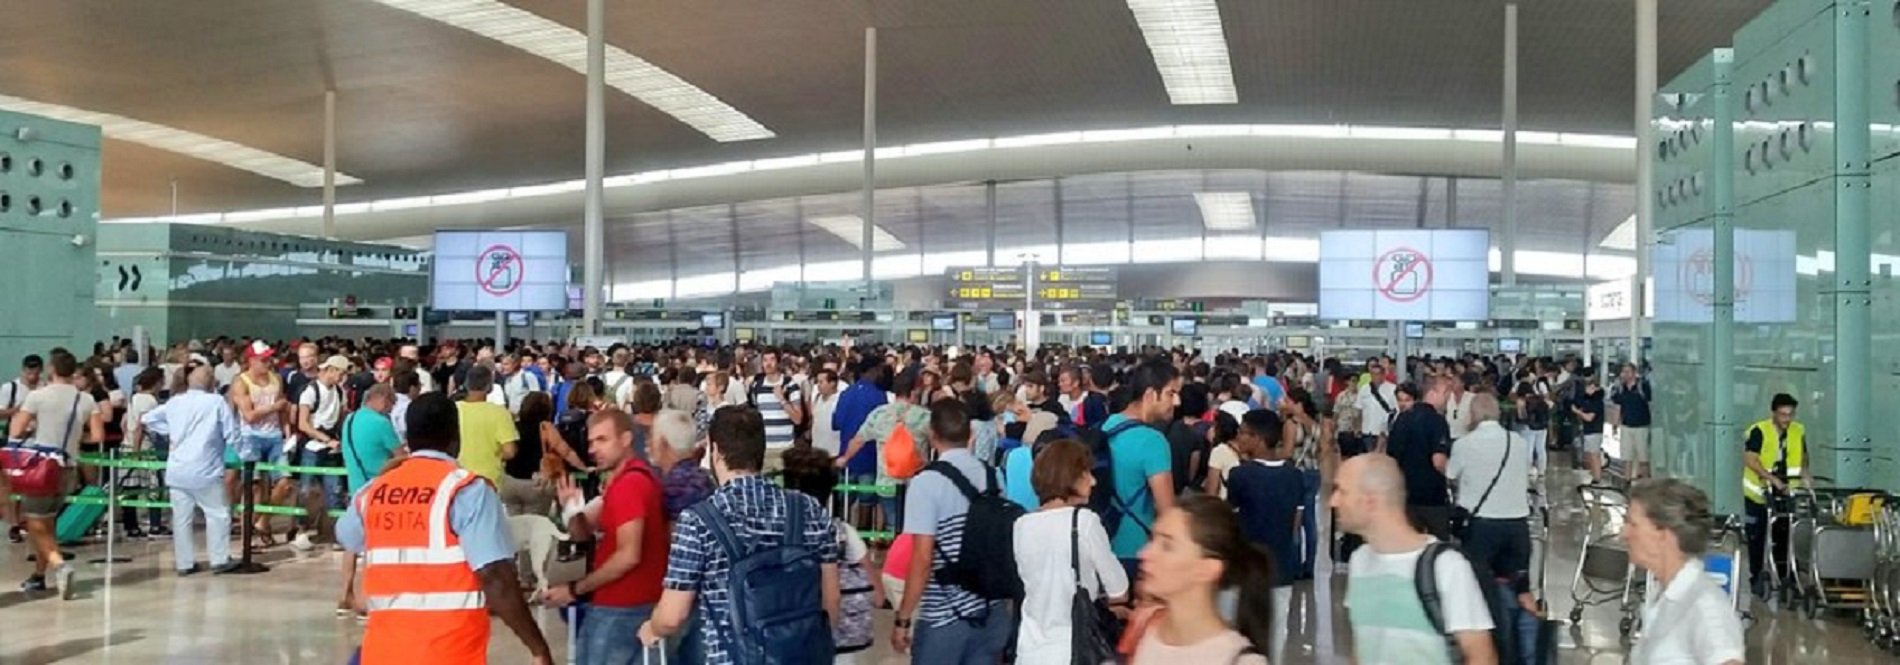 Barcelona airport strike: queues are back despite police presence